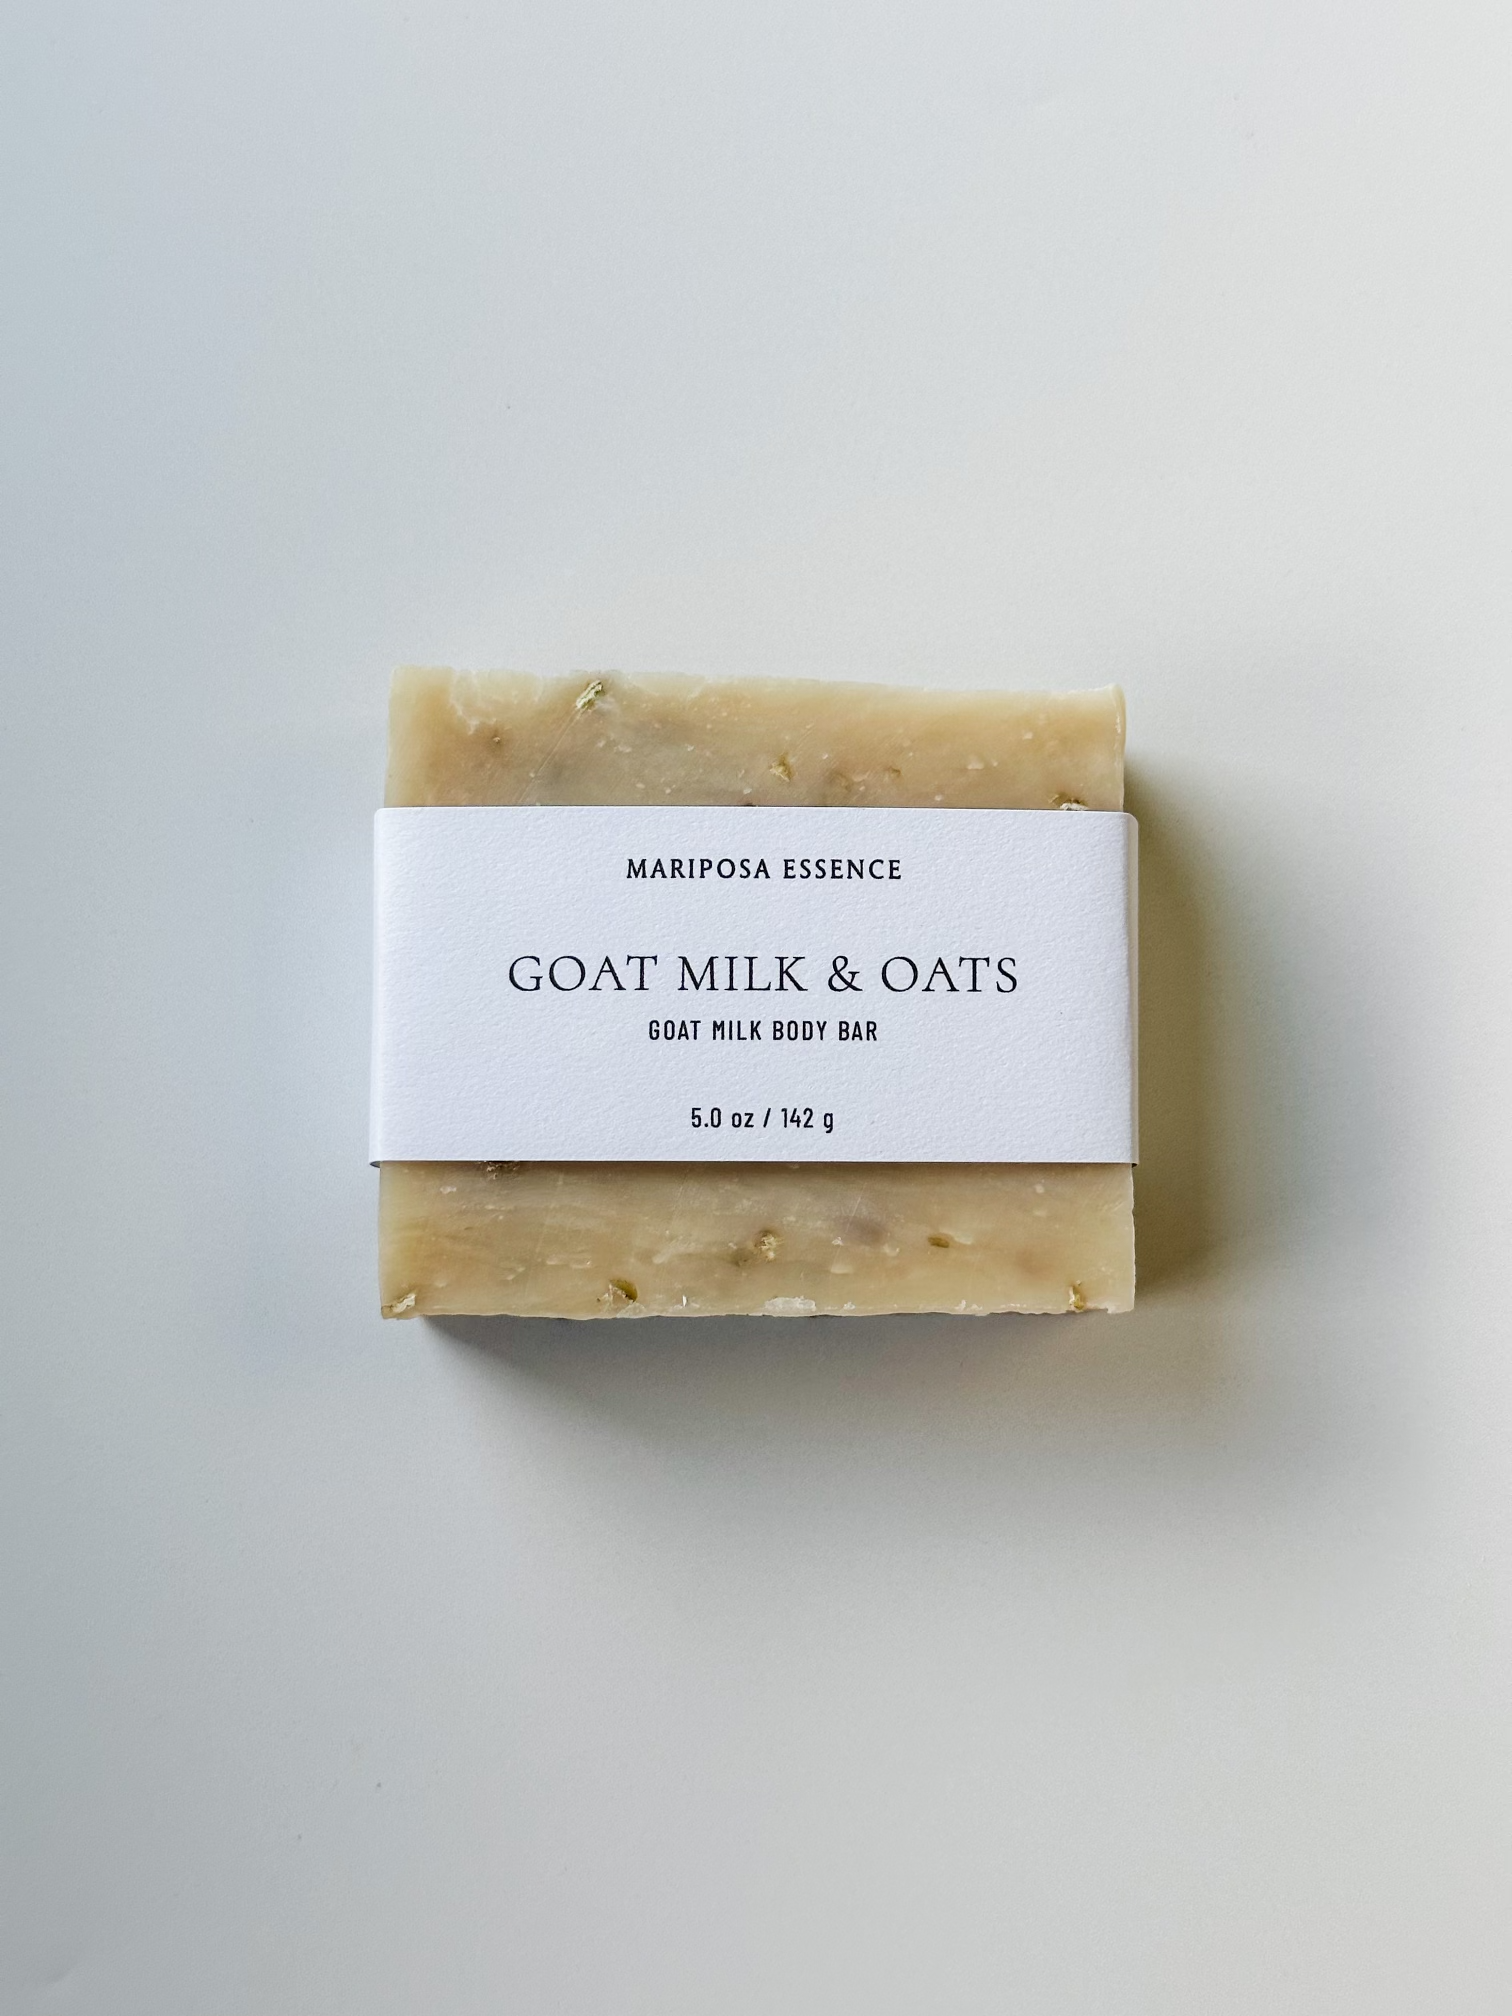 Goat Milk and Oats body bar